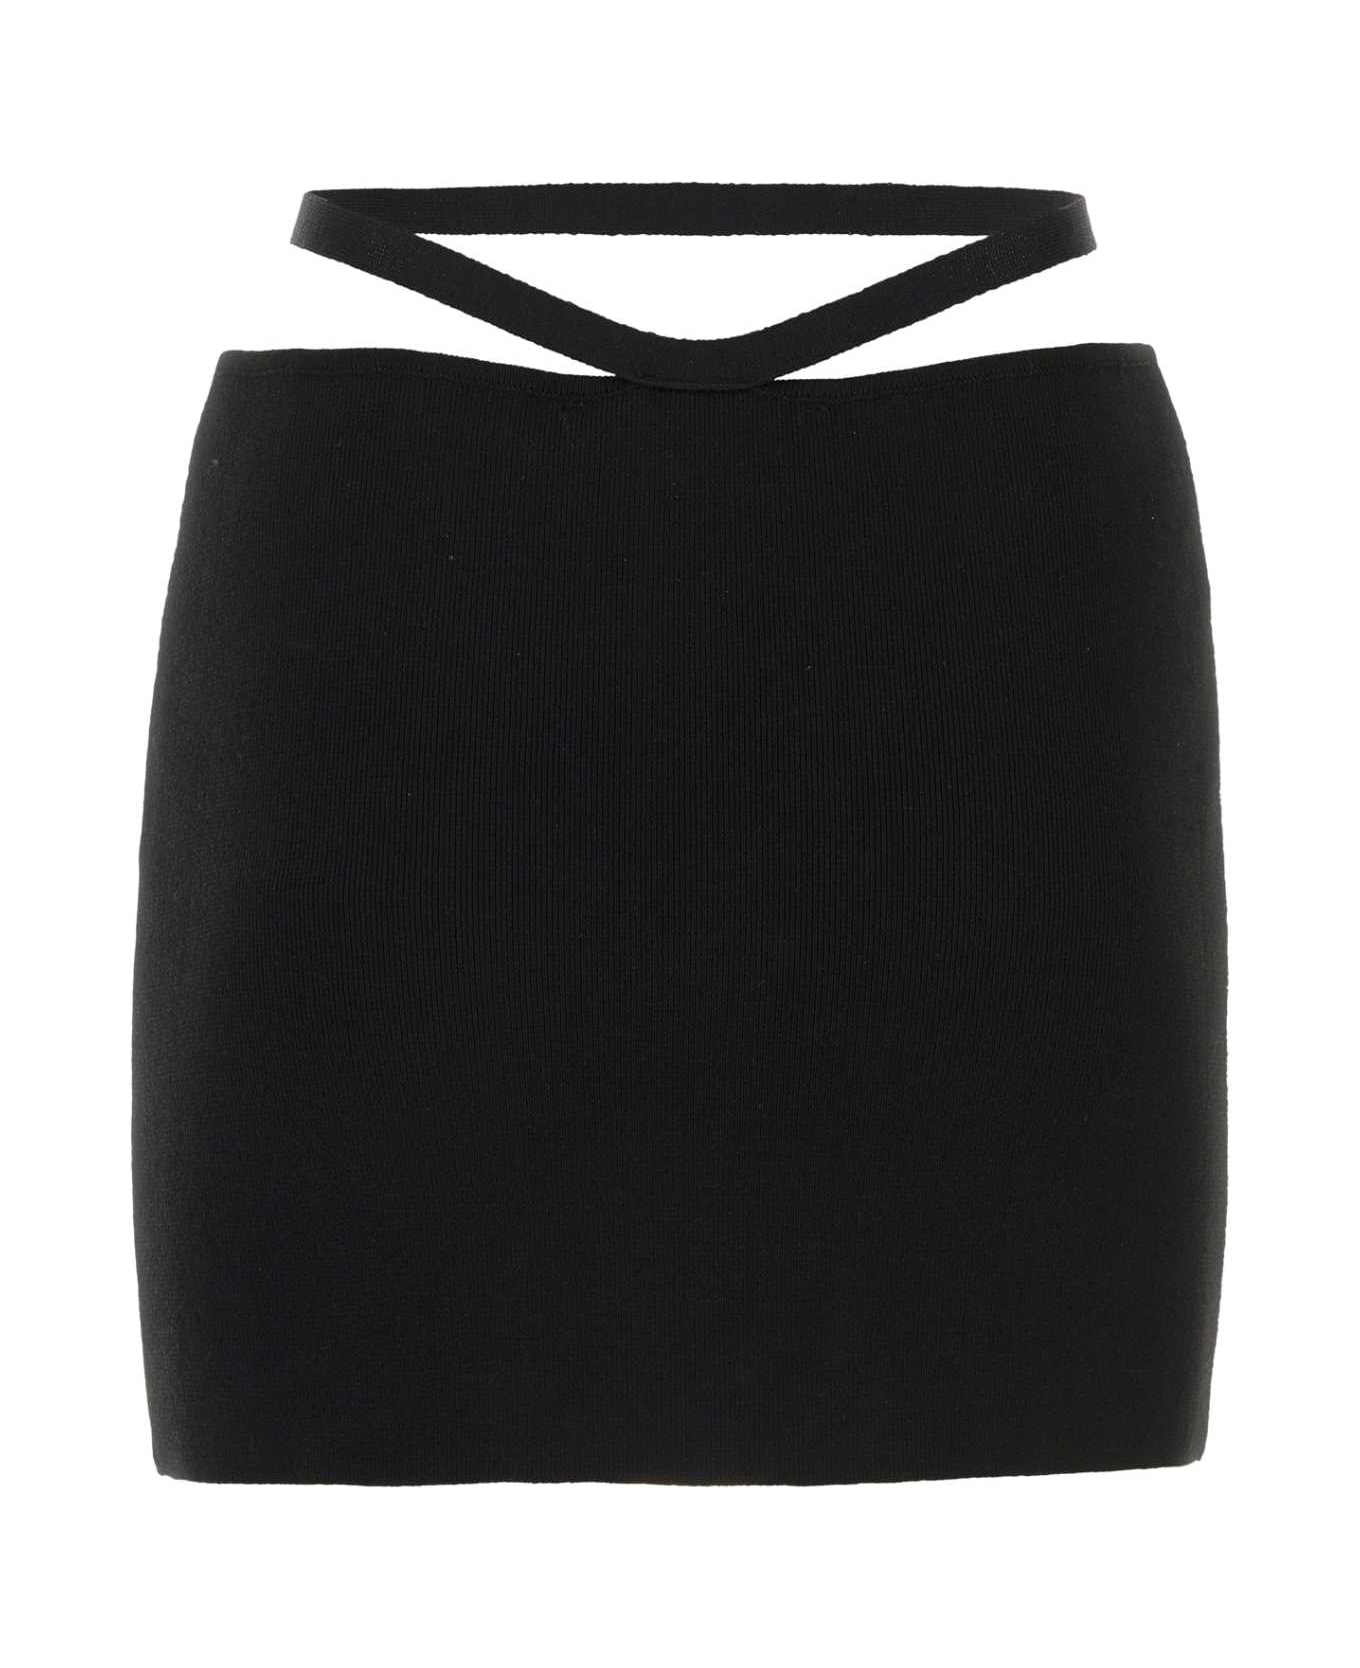 ANDREĀDAMO Black Stretch Viscose Blend Mini Skirt - Black